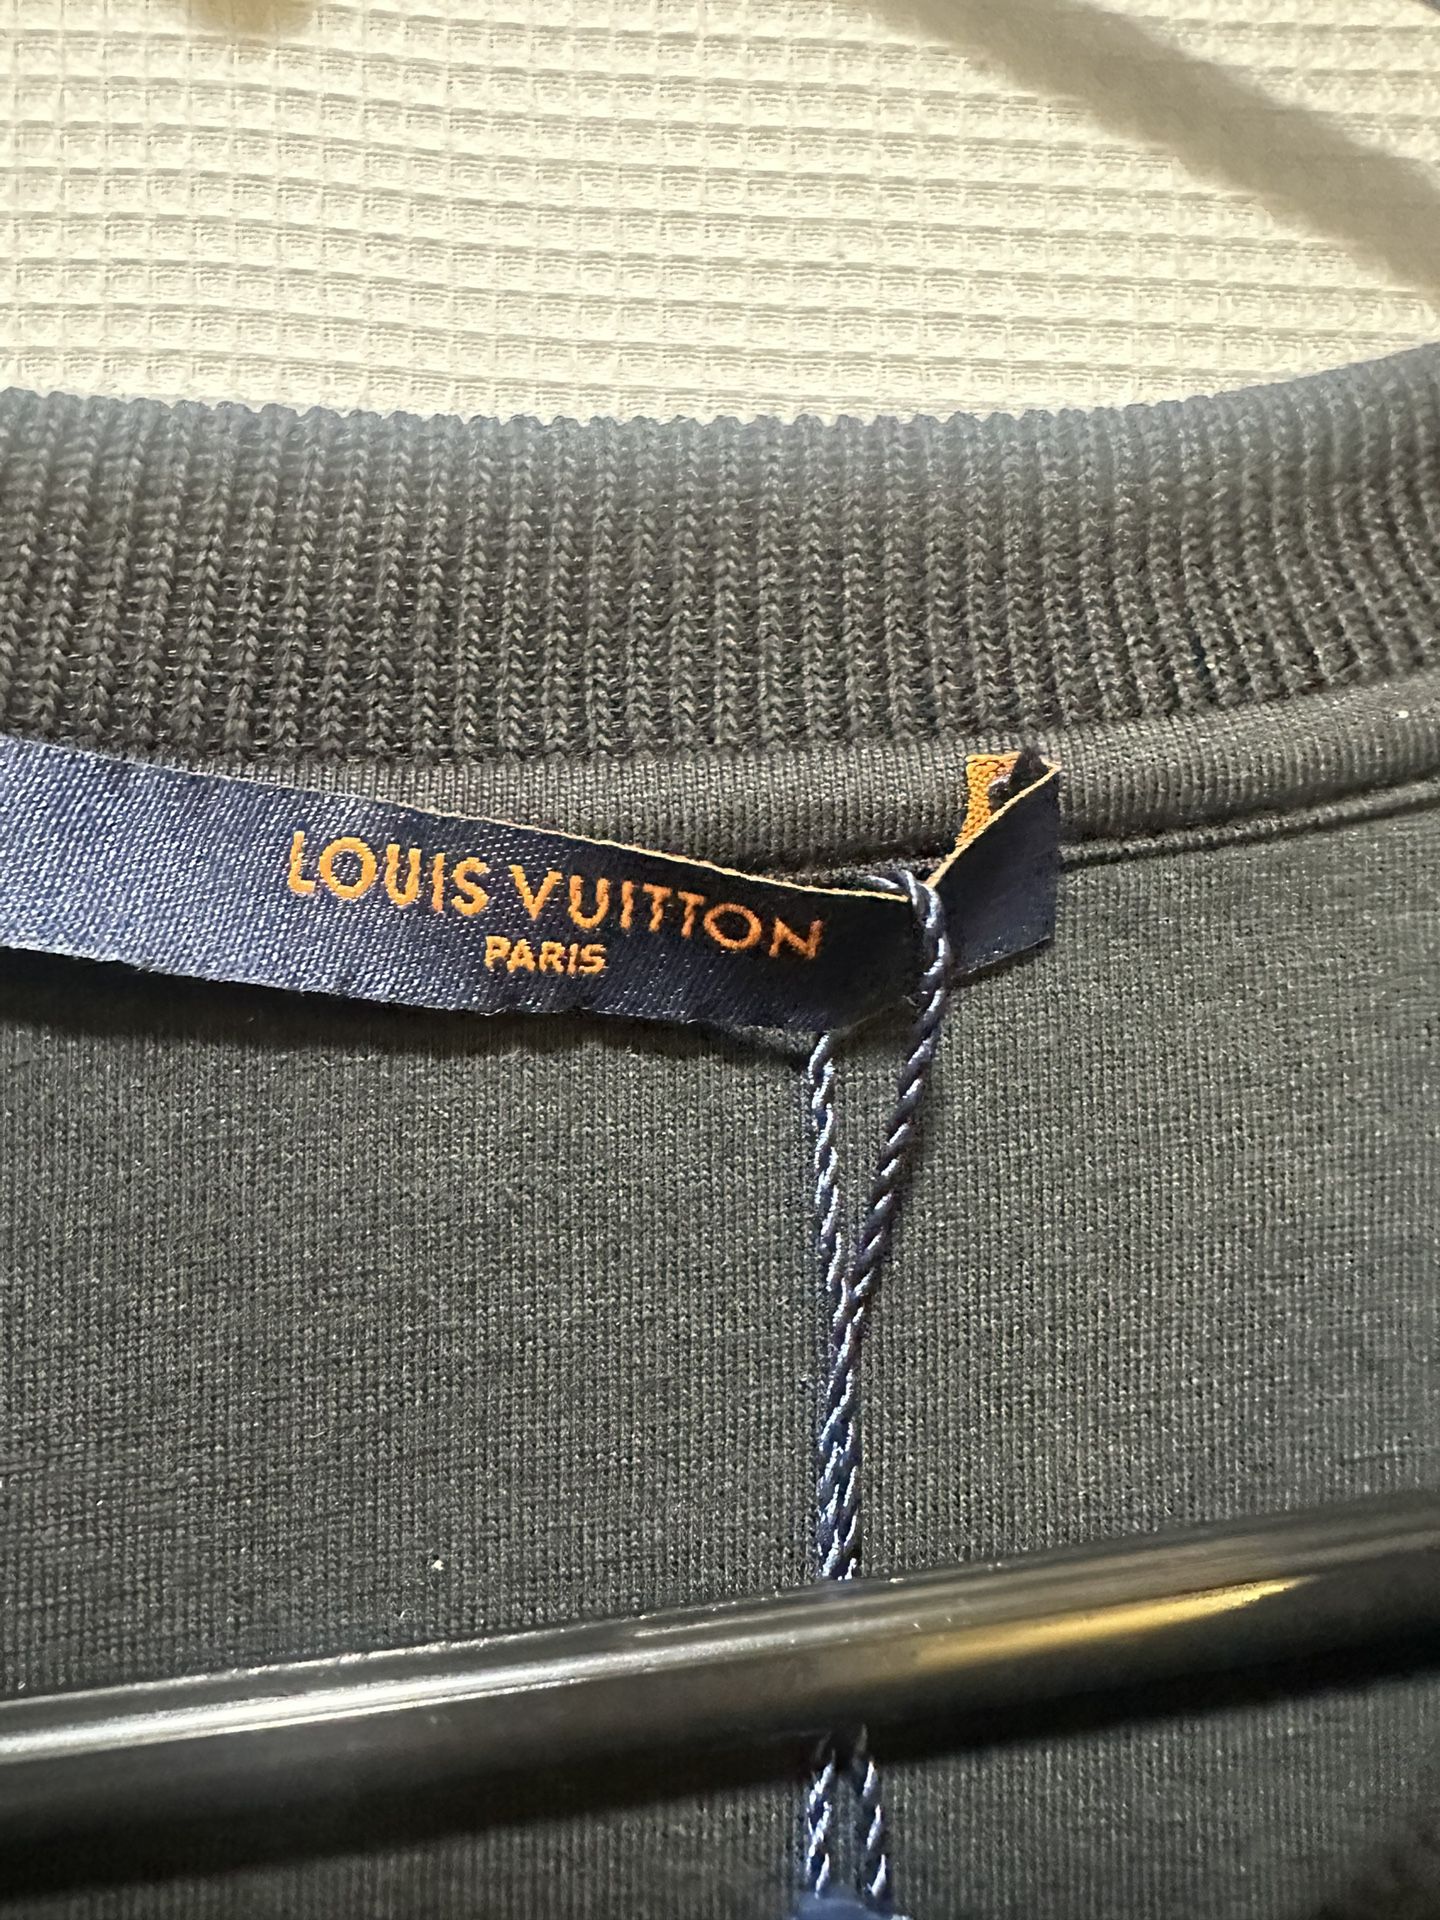 100% Authentic Louis Vuitton Neogram 30MM Damier Graphite 90 (Men's) - $350  for Sale in San Diego, CA - OfferUp